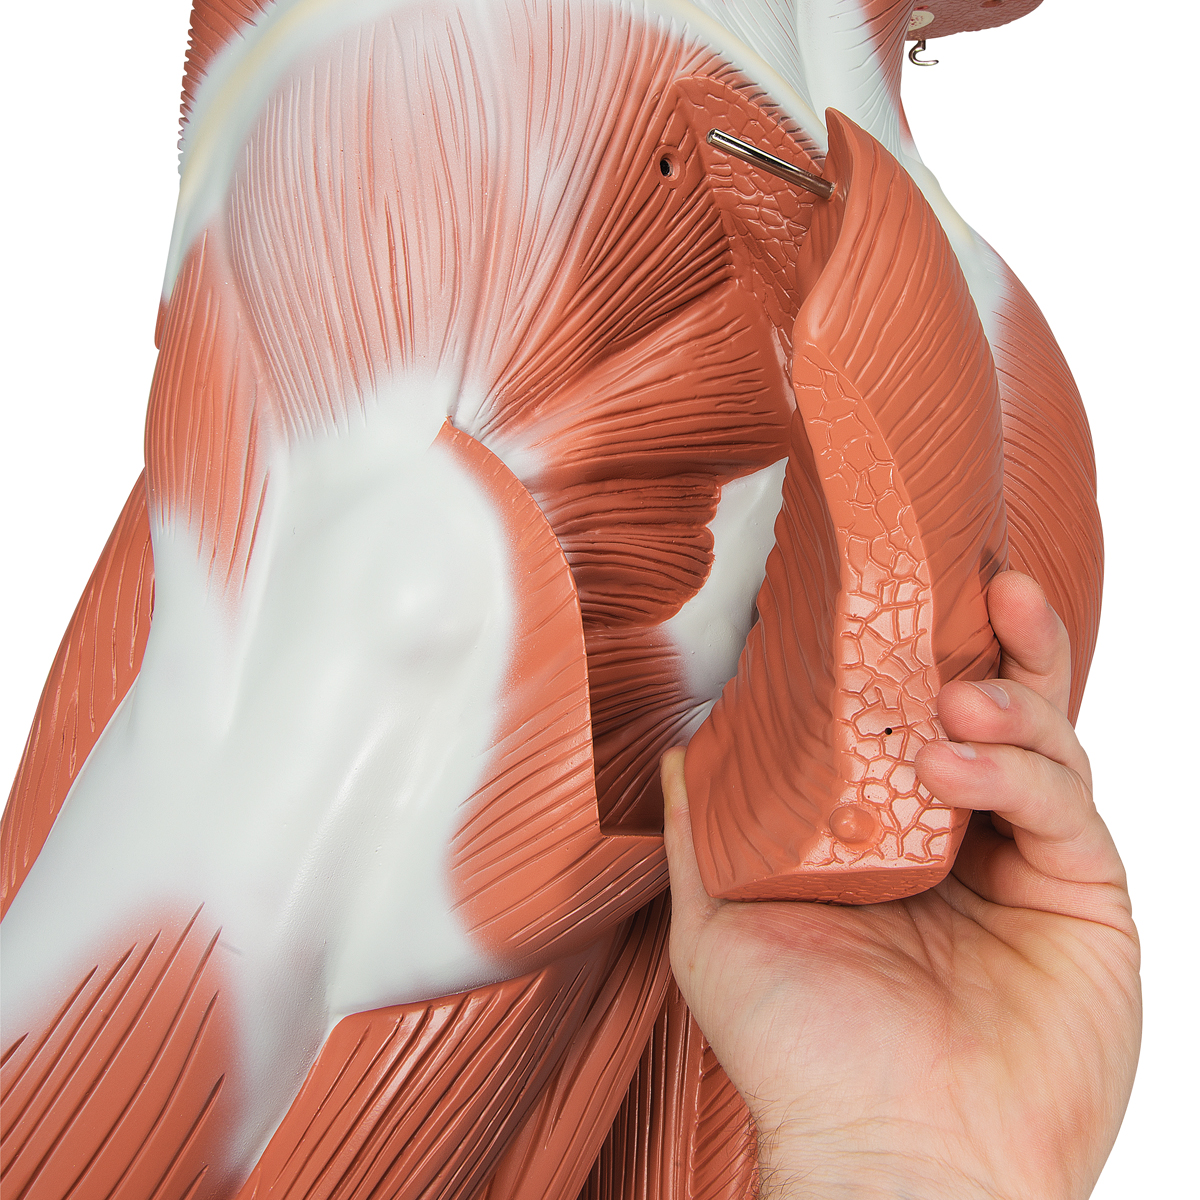 Anatomical Teaching Models, Plastic Human Muscle Models